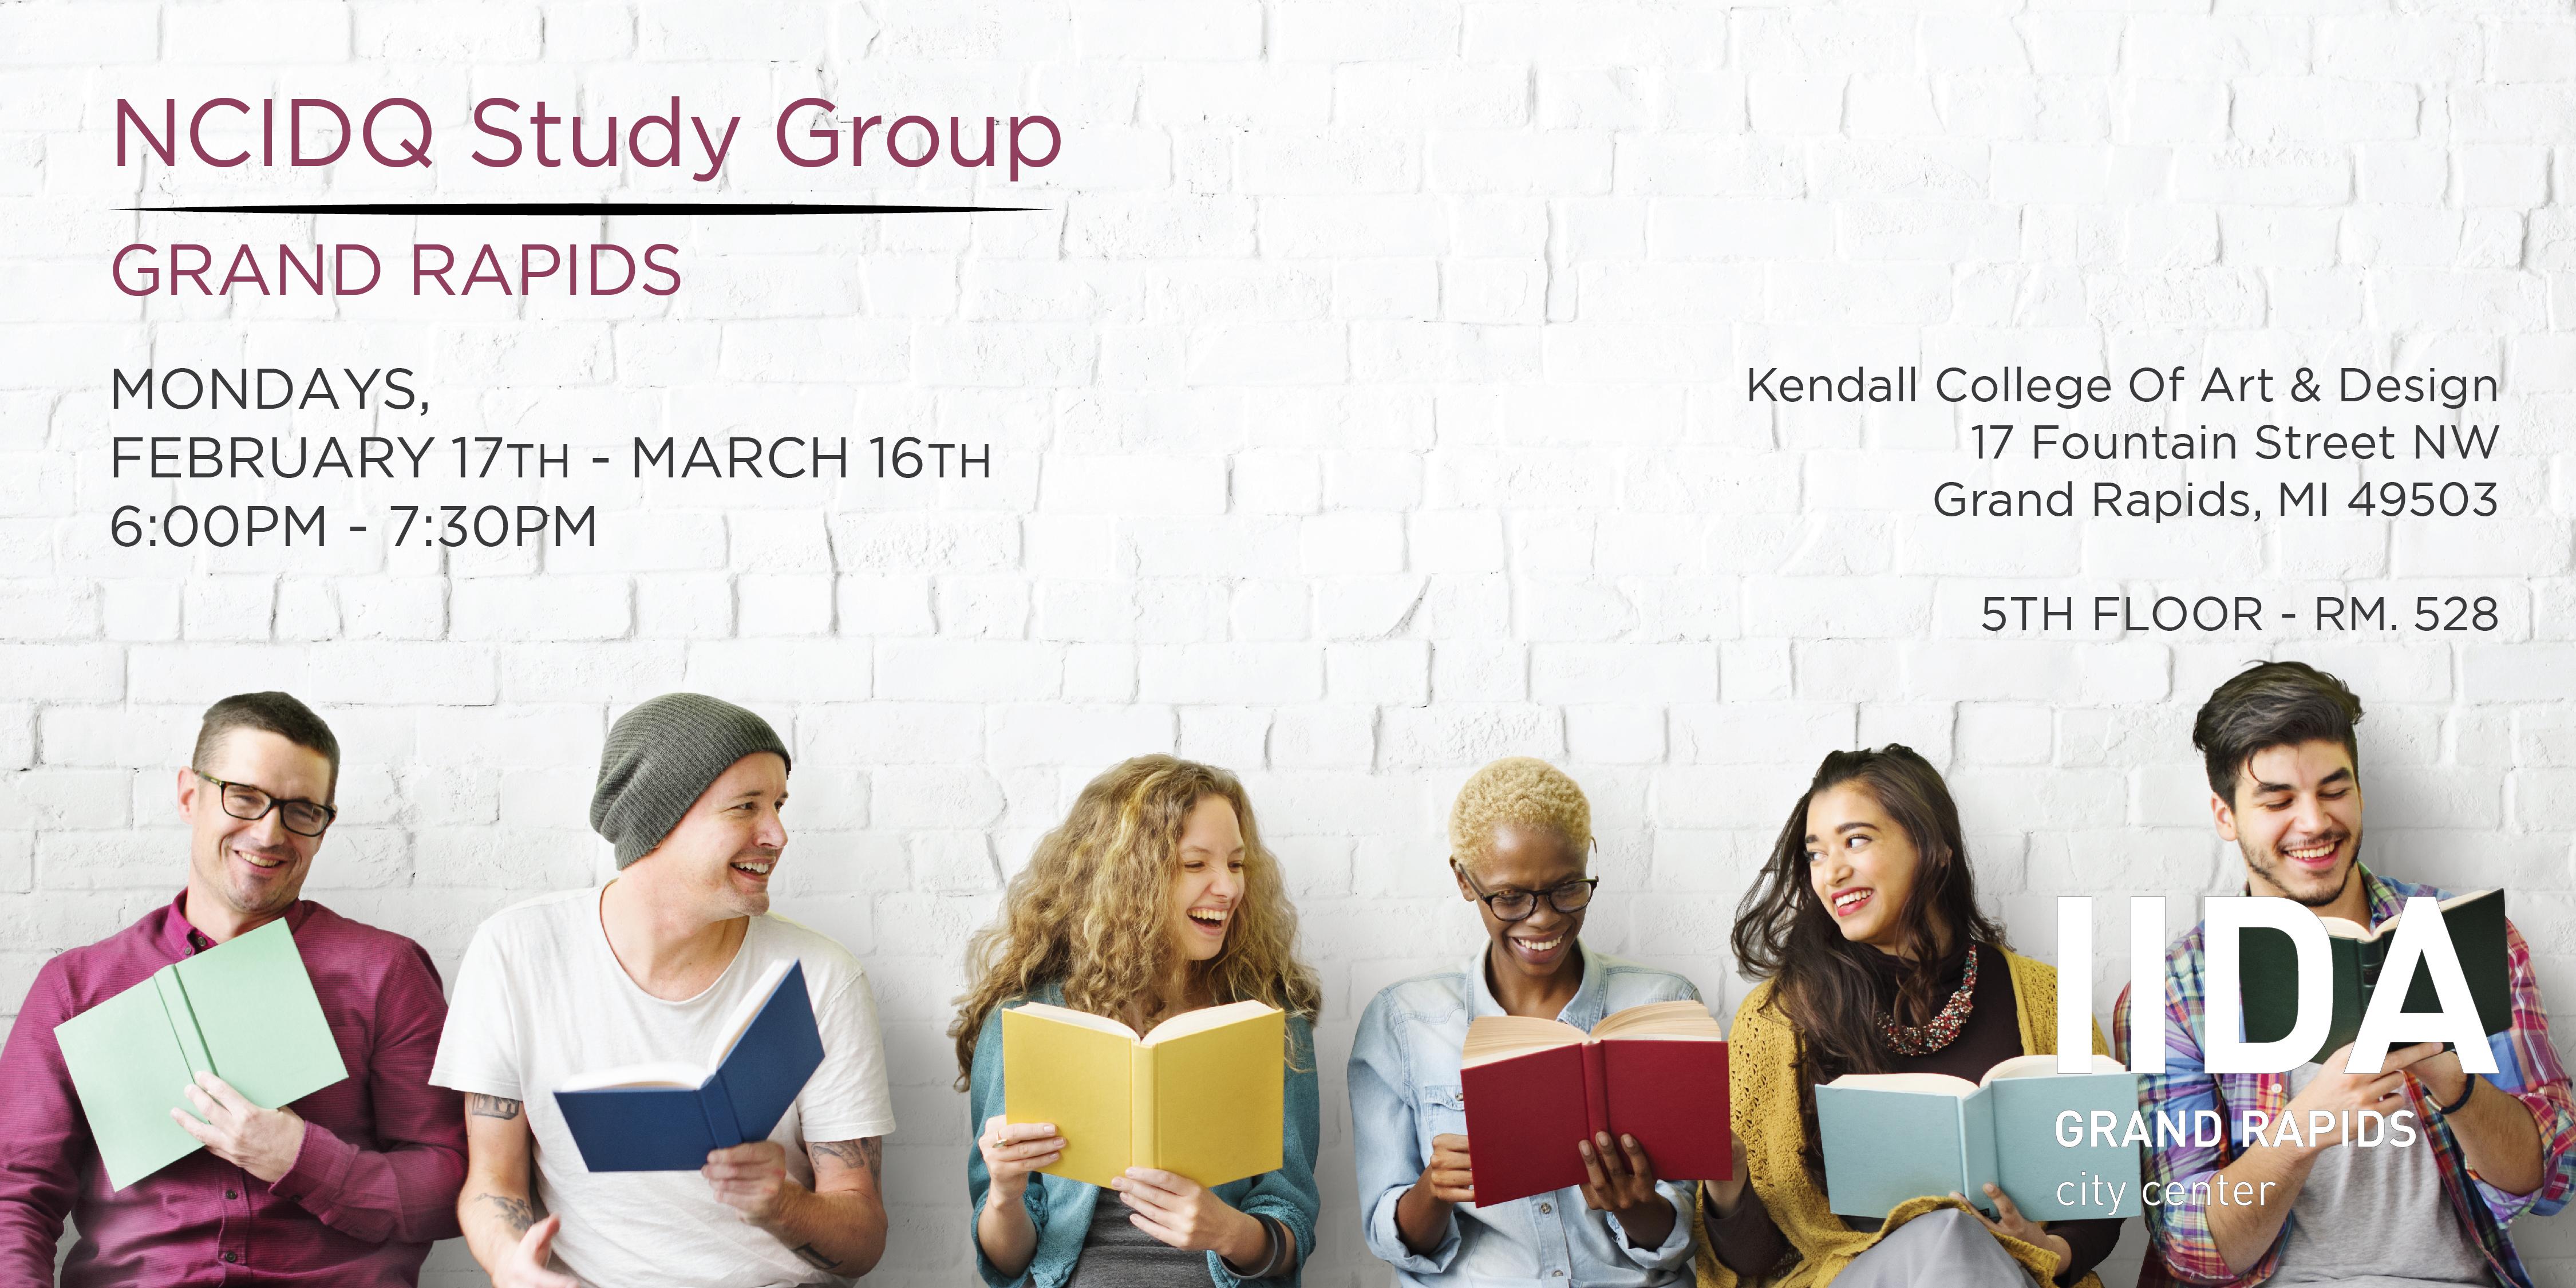 NCIDQ Study Group Grand Rapids